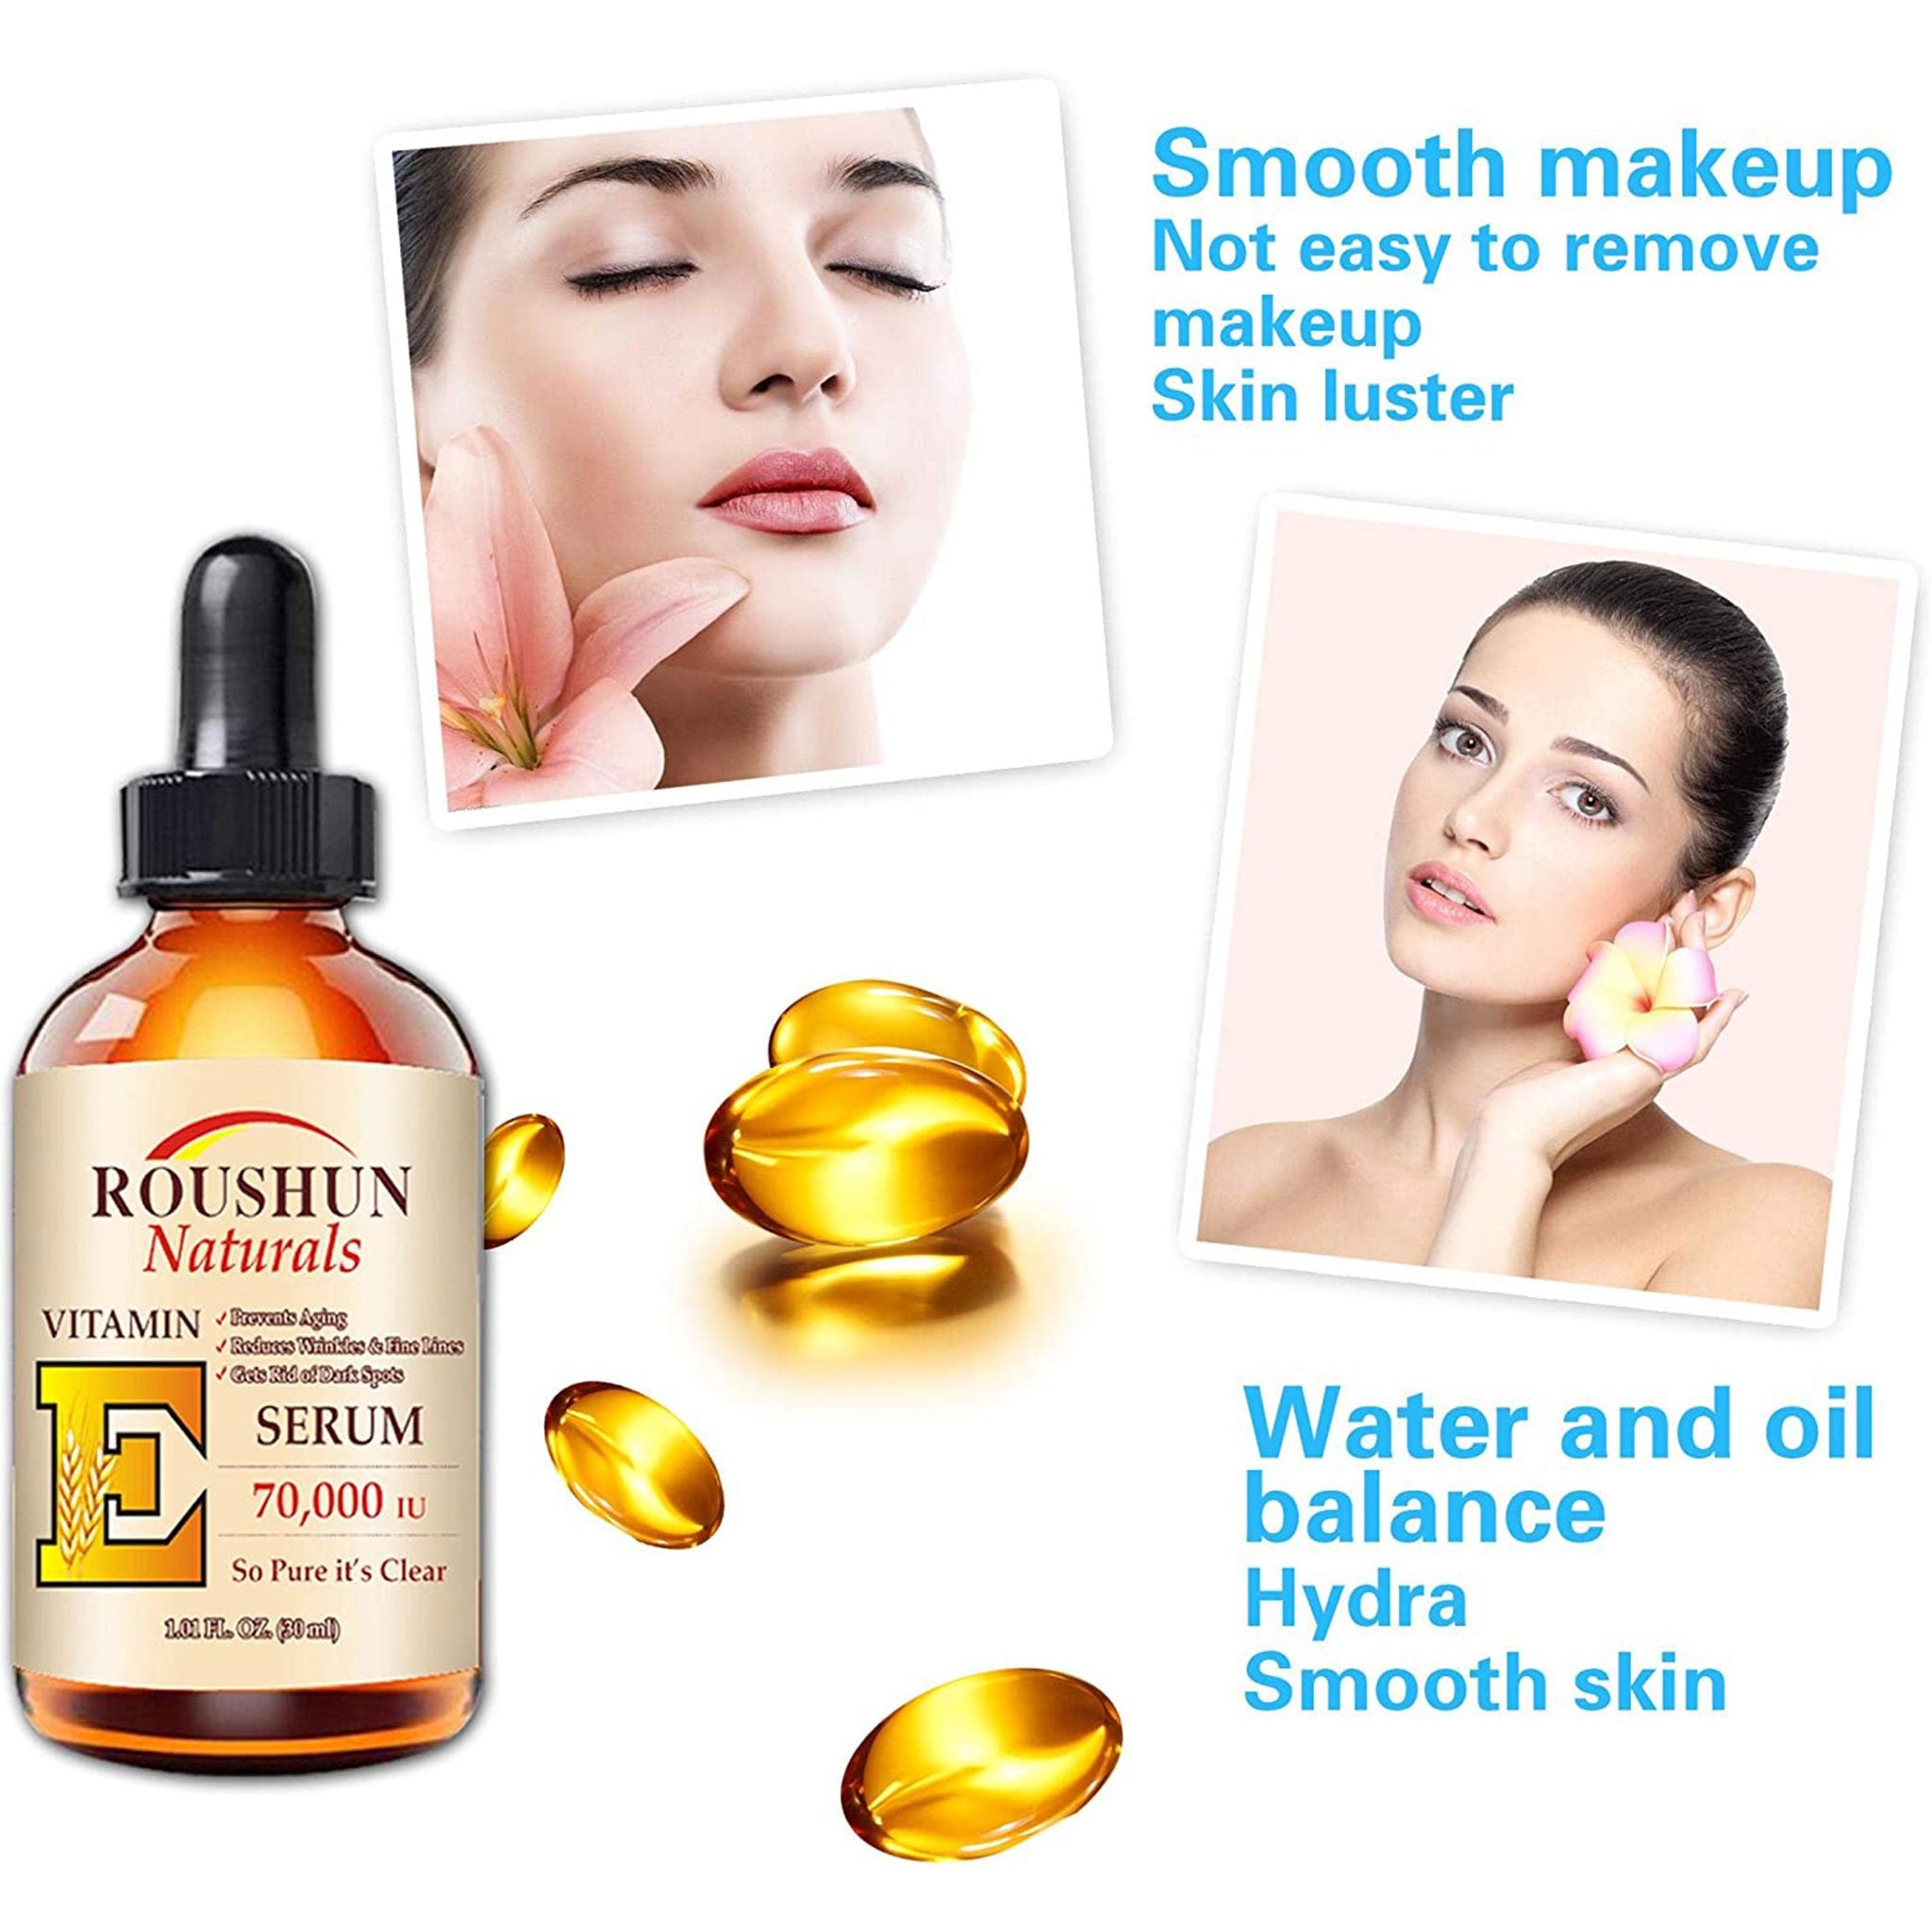 Roushun Naturals Vitamin E Serum 70000 IU 101floz30mlAntiaging reduces wrinklesfine lines